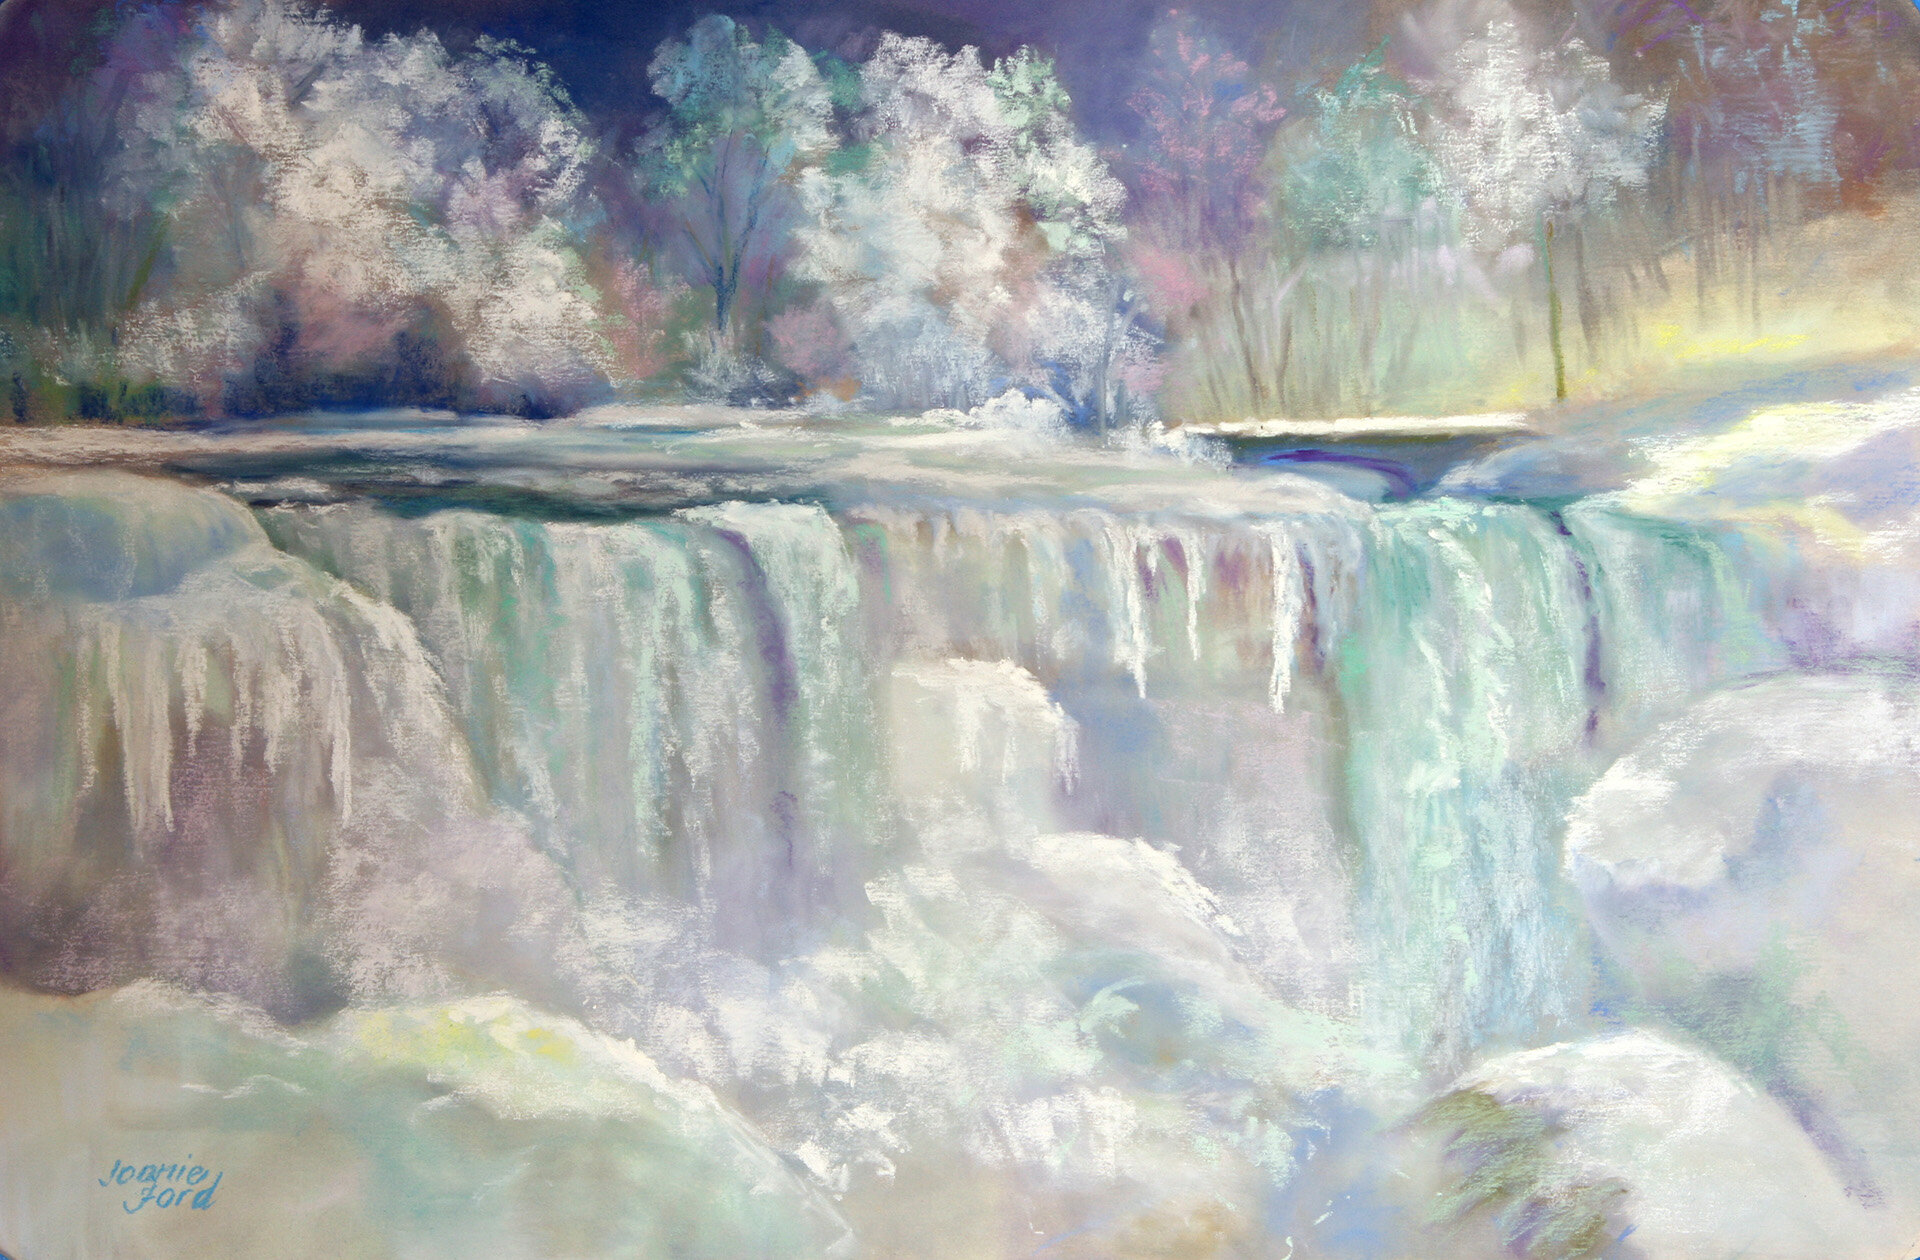 Ford Joanie - Frozen Niagara Falls